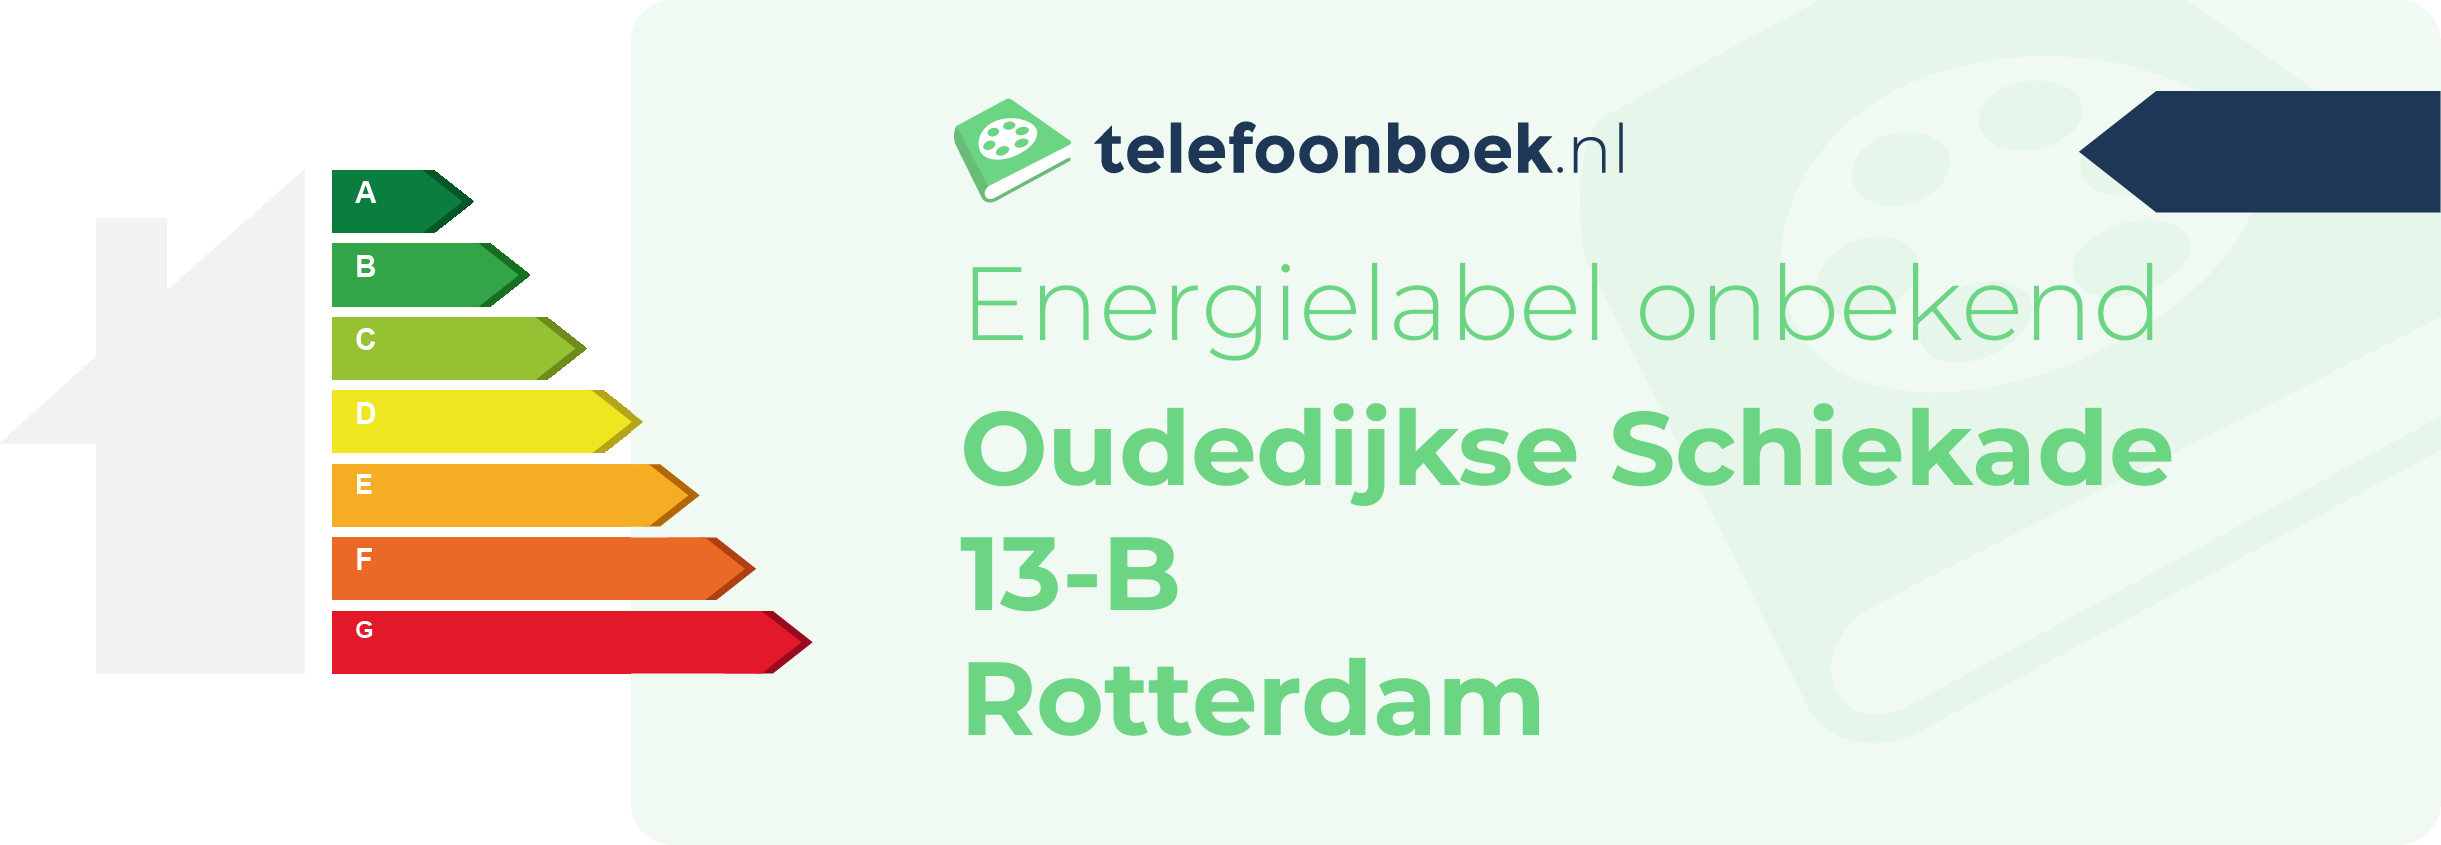 Energielabel Oudedijkse Schiekade 13-B Rotterdam